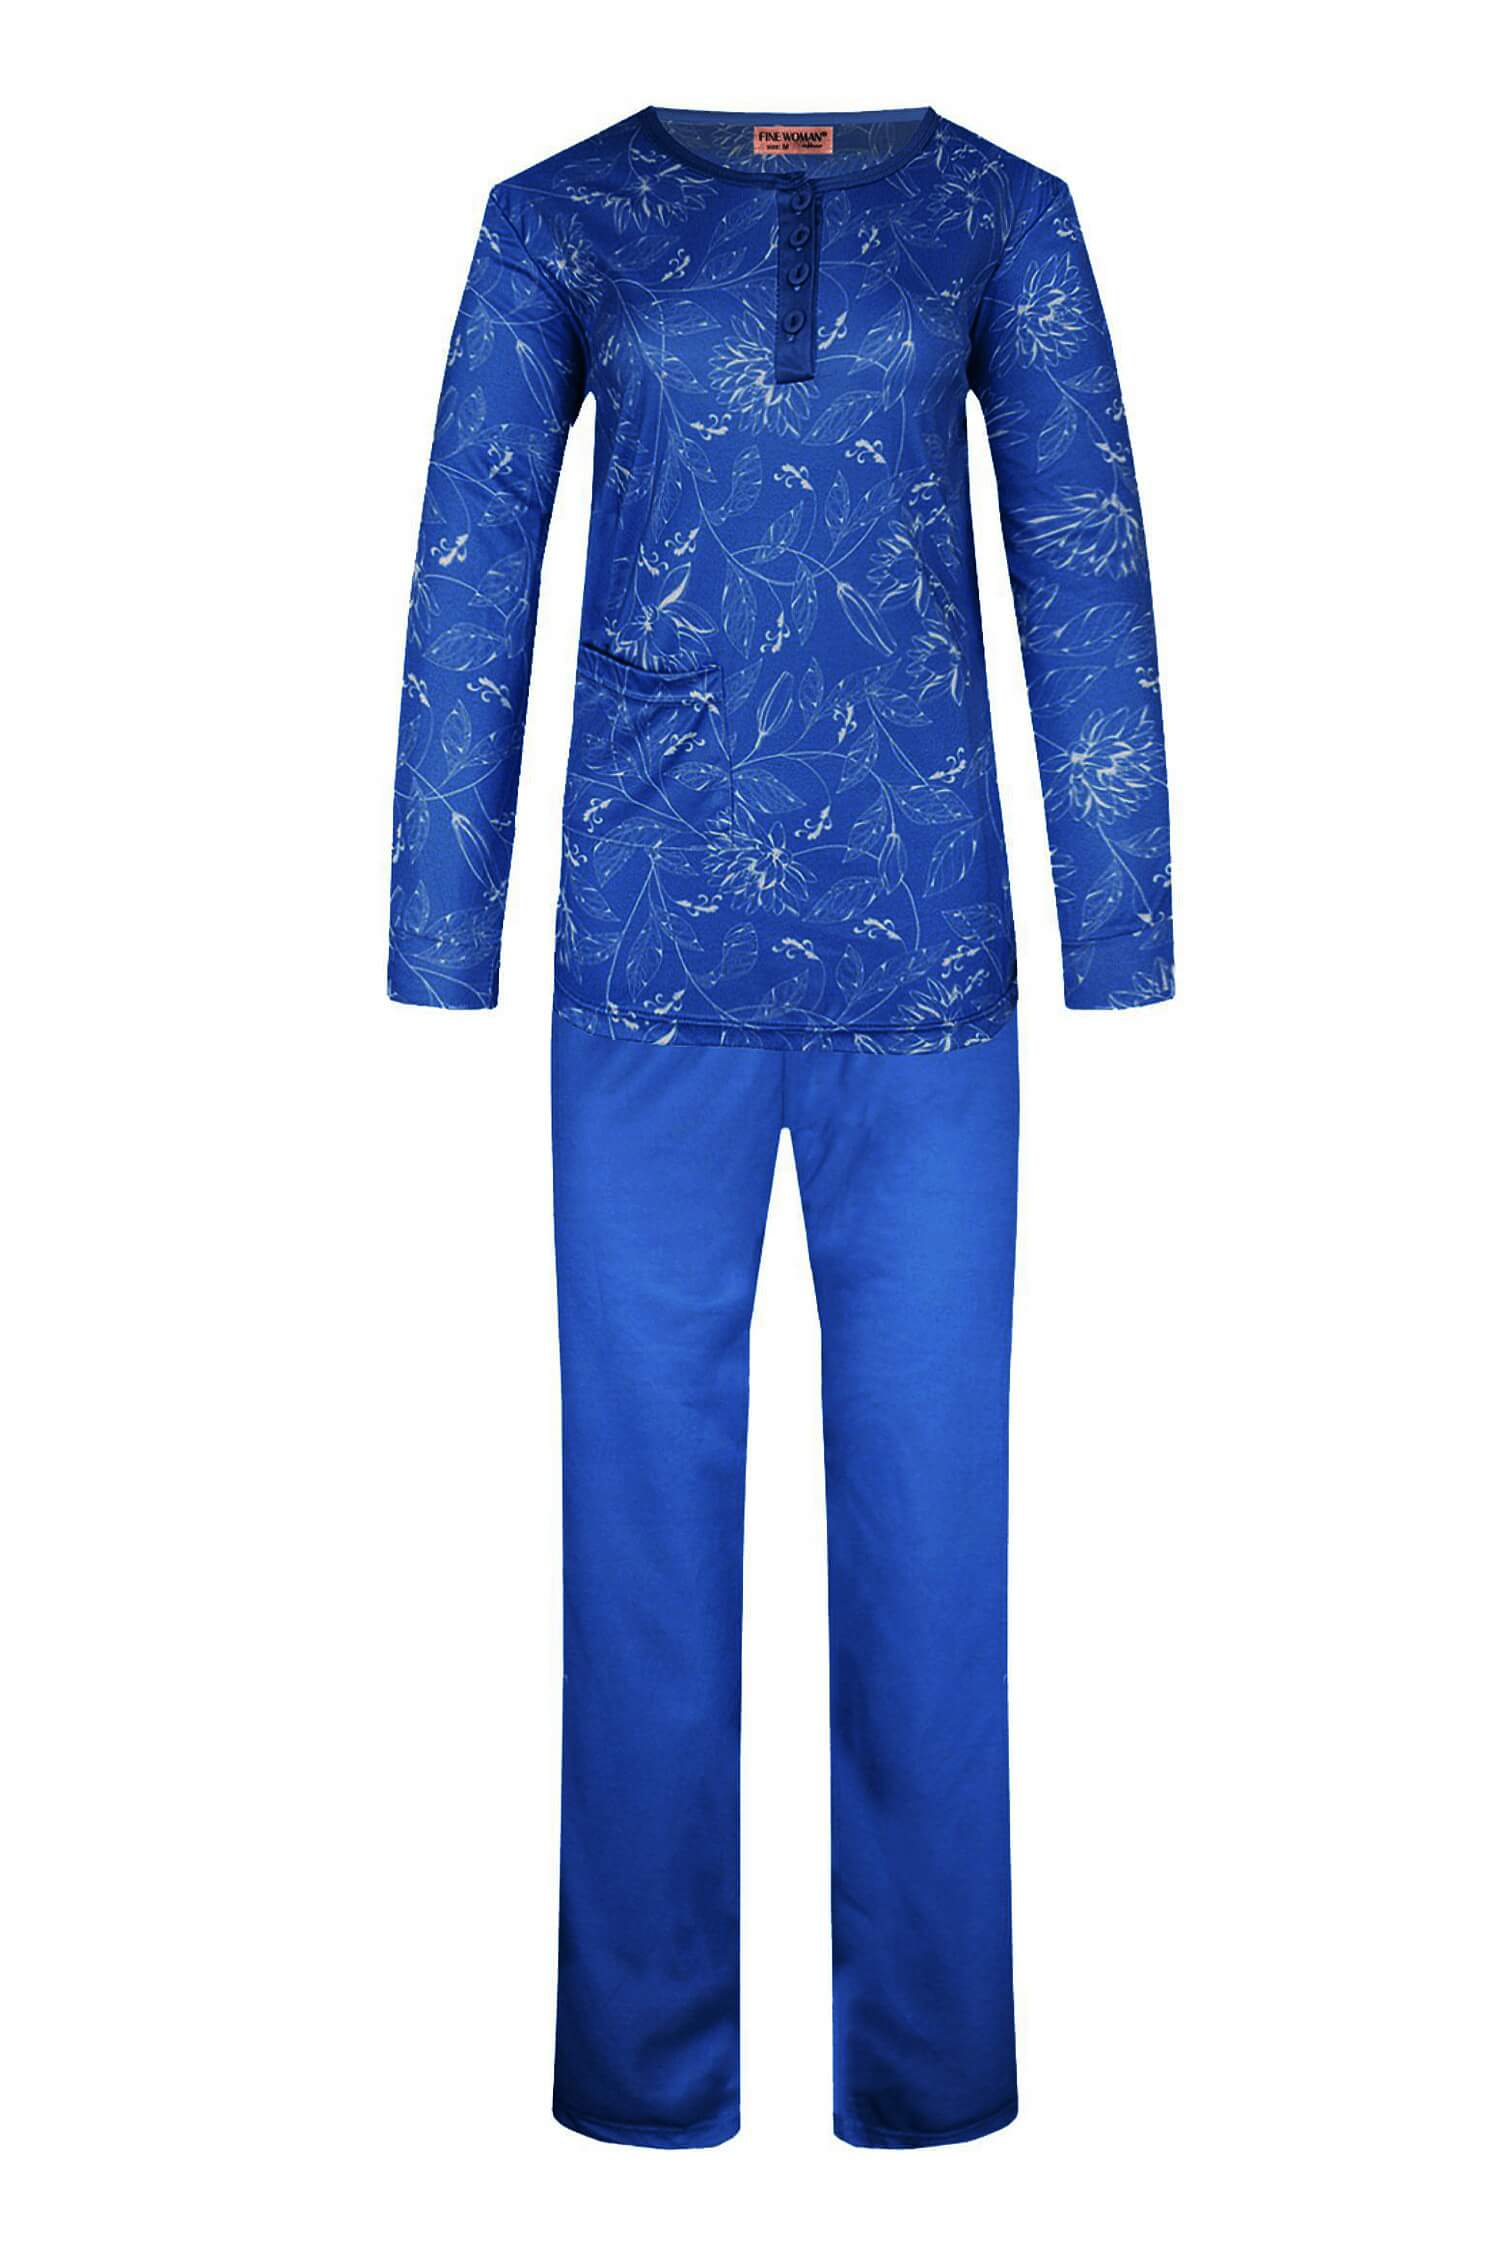 Sára dámské pyžamo dlouhý rukáv 2299 XL tmavě modrá